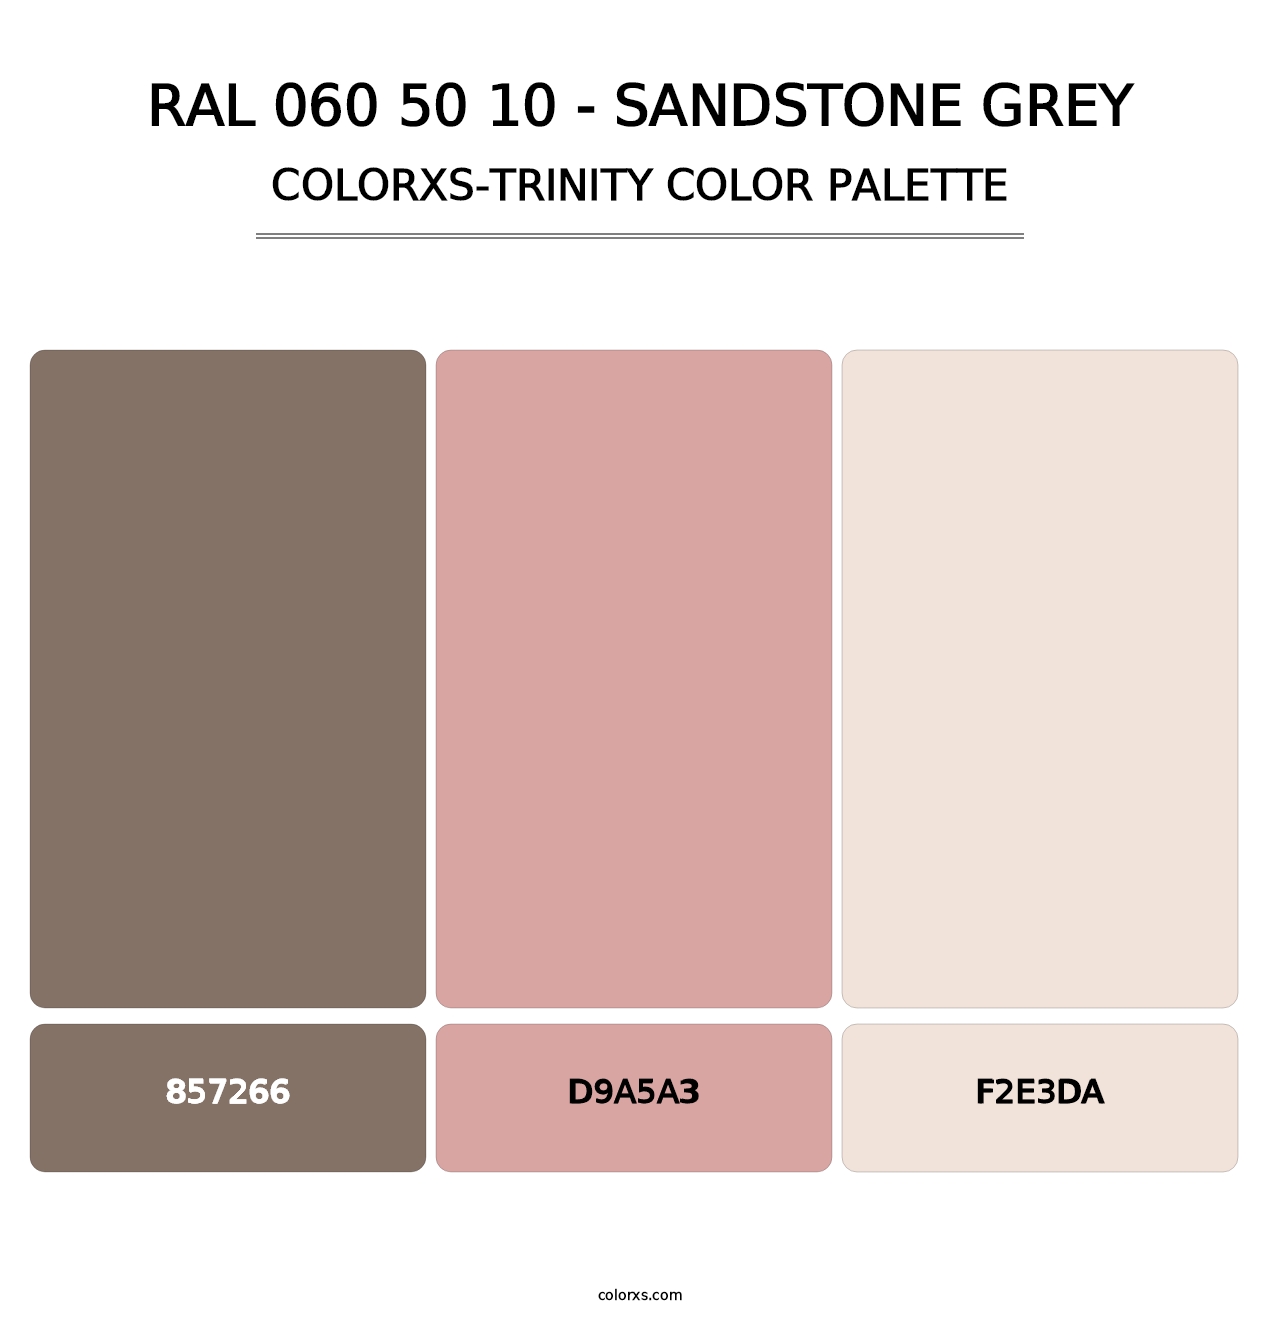 RAL 060 50 10 - Sandstone Grey - Colorxs Trinity Palette